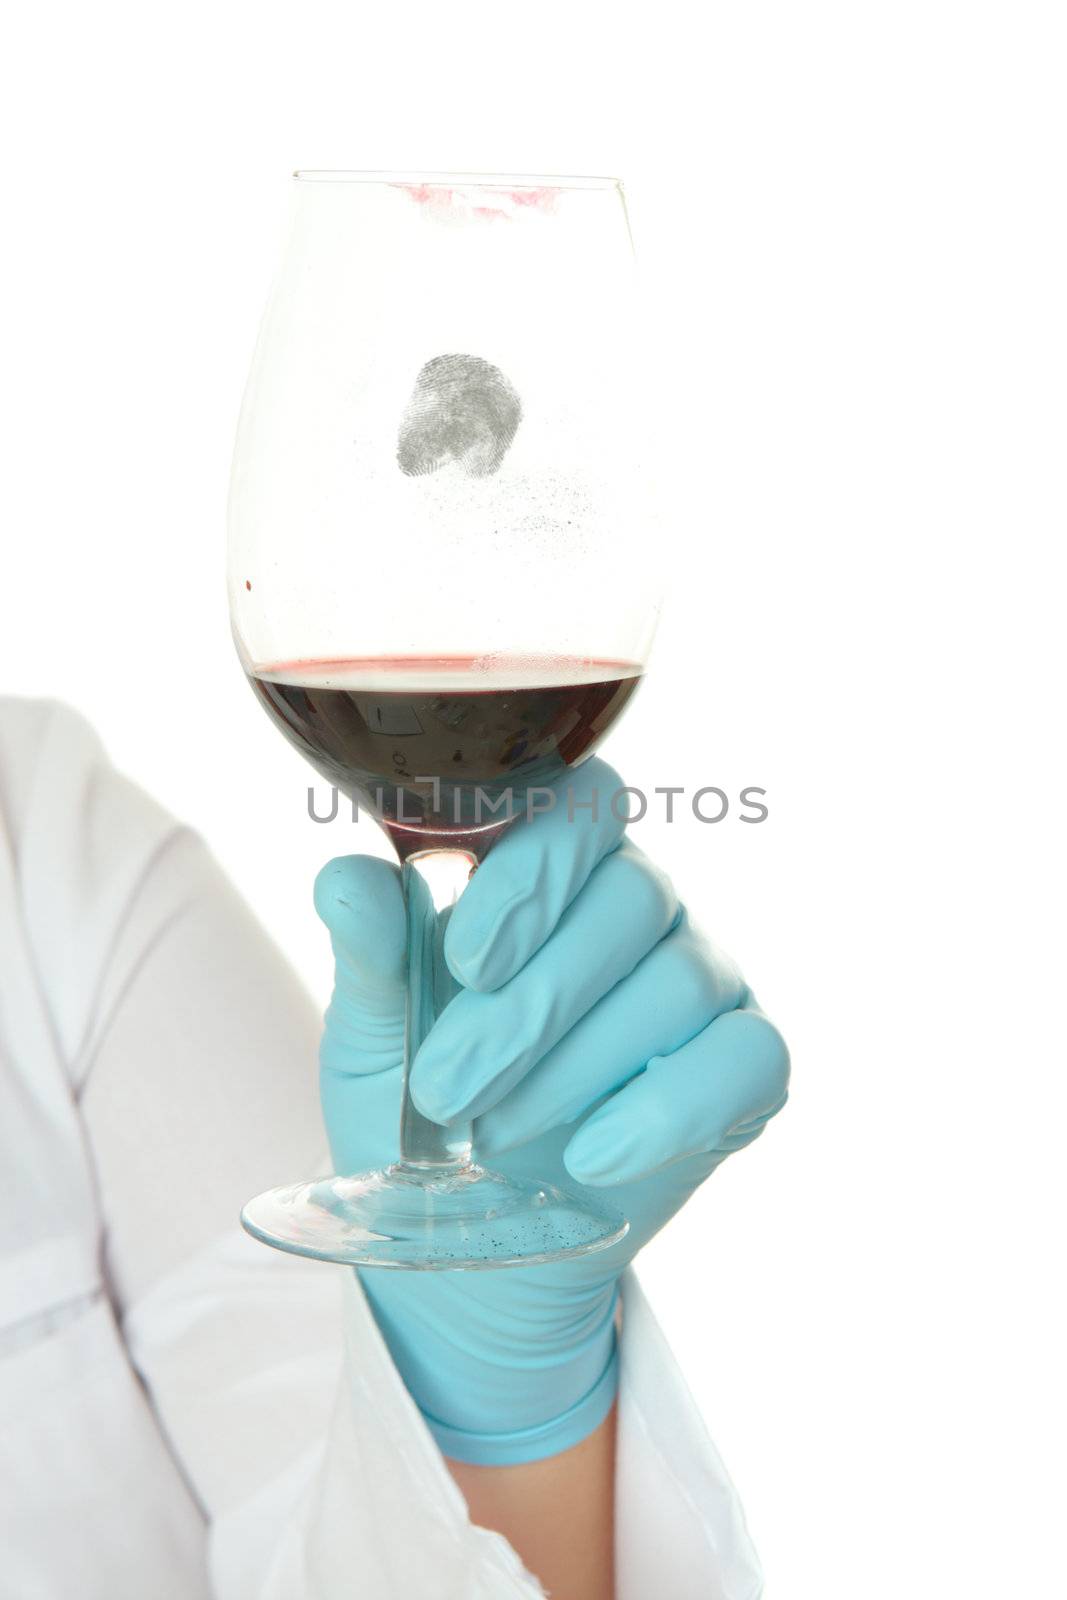 A fingerprint on a wine glass.